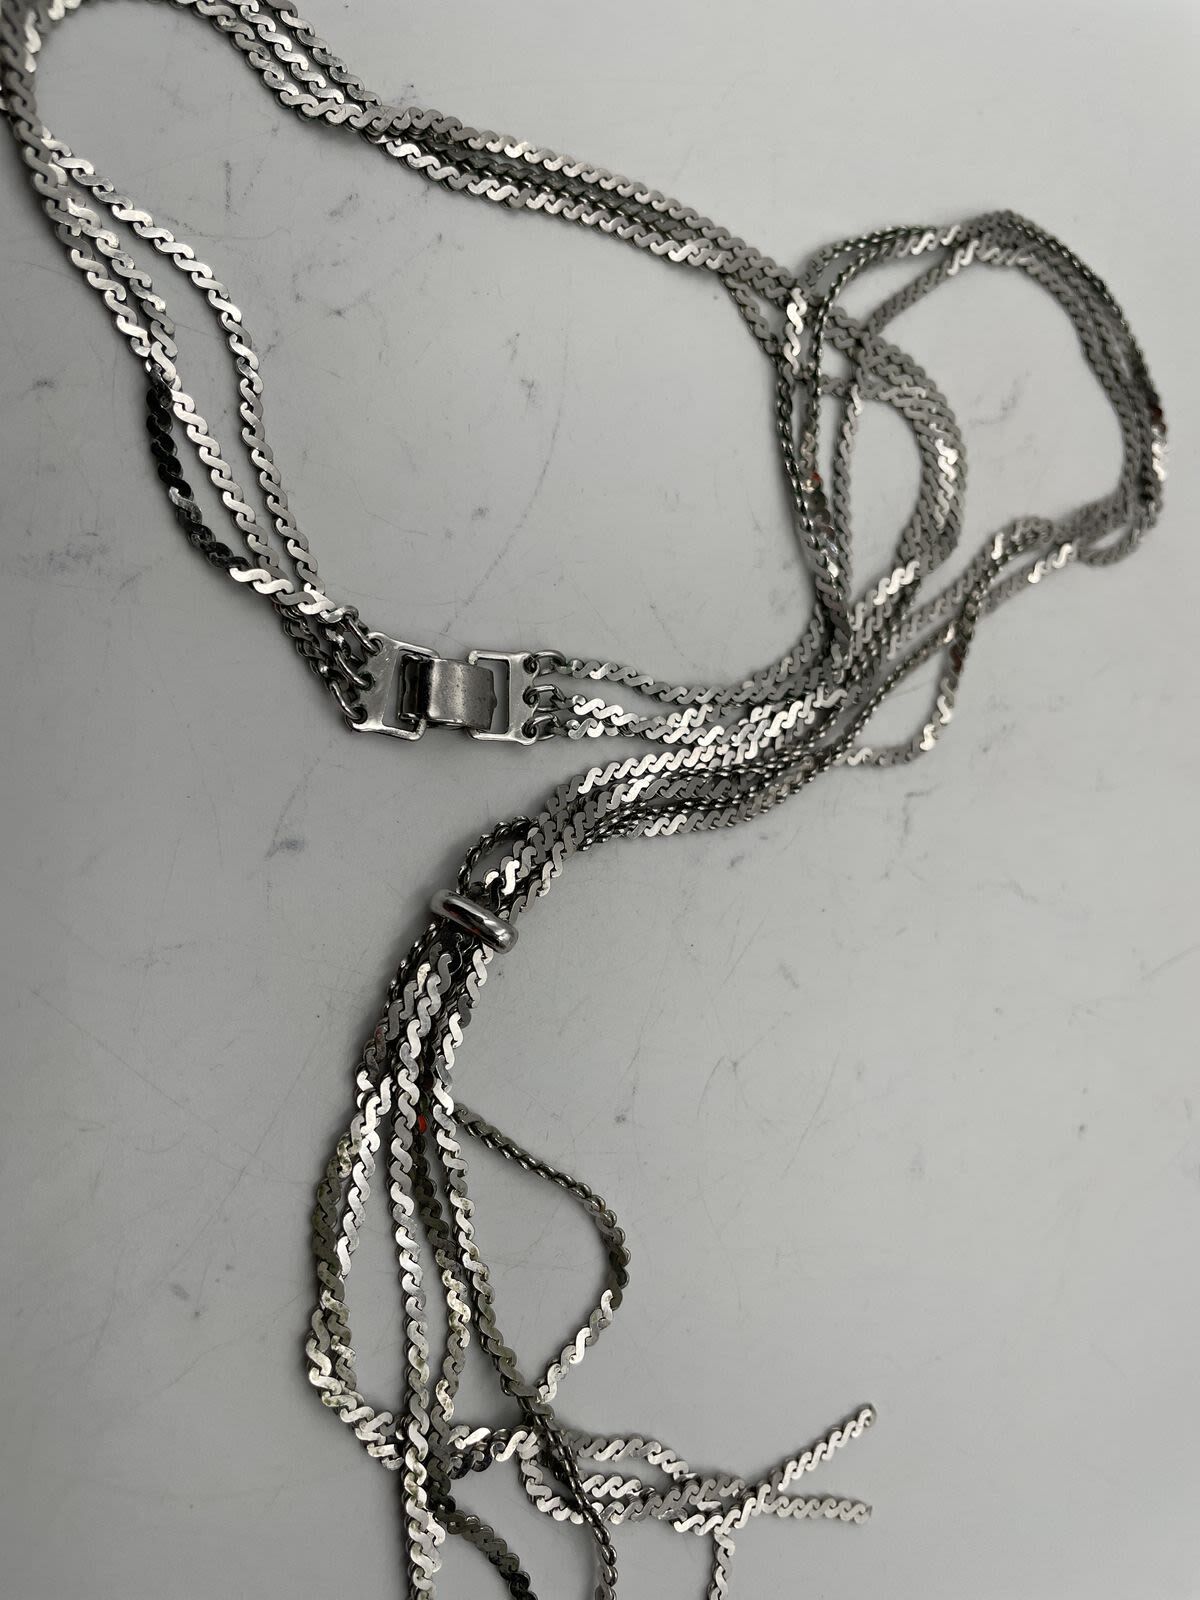 Napier Vintage Sterling Silver Unusual Link Chain Necklace | eBay